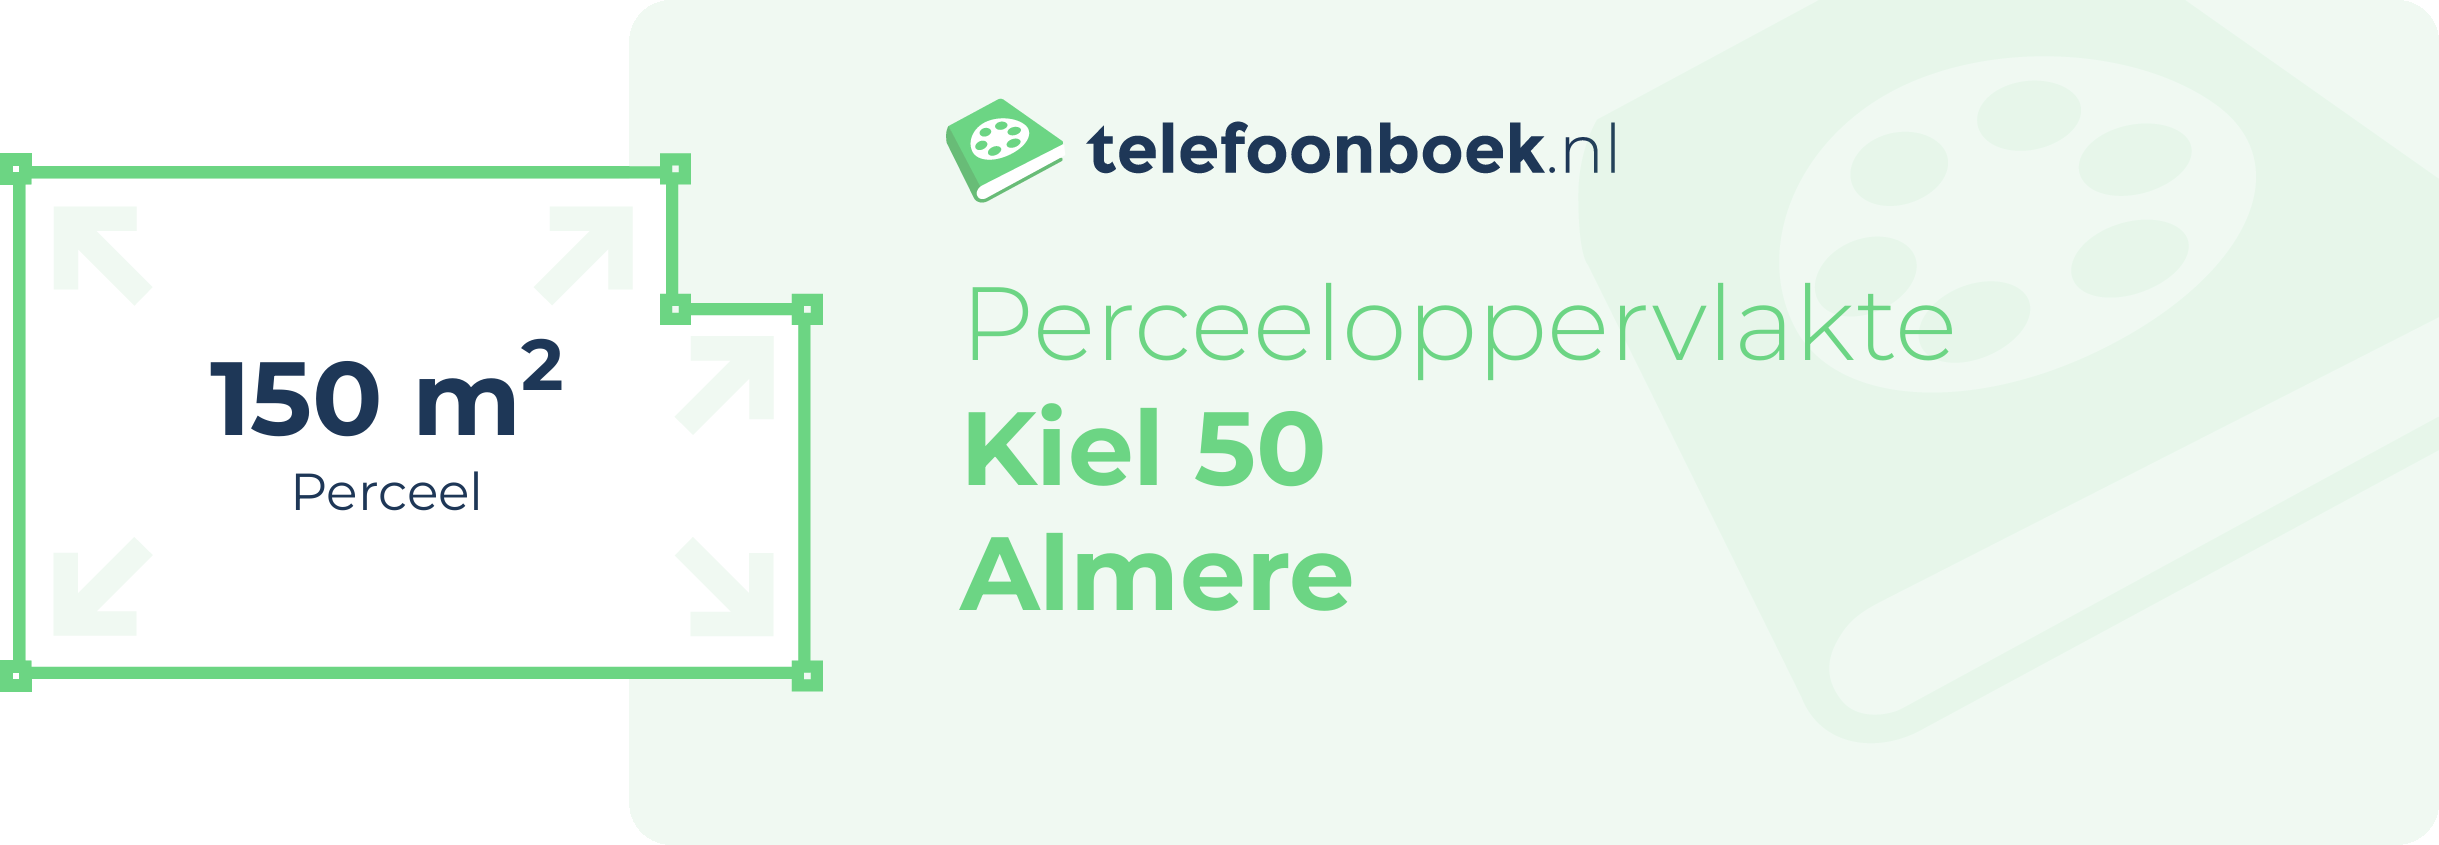 Perceeloppervlakte Kiel 50 Almere